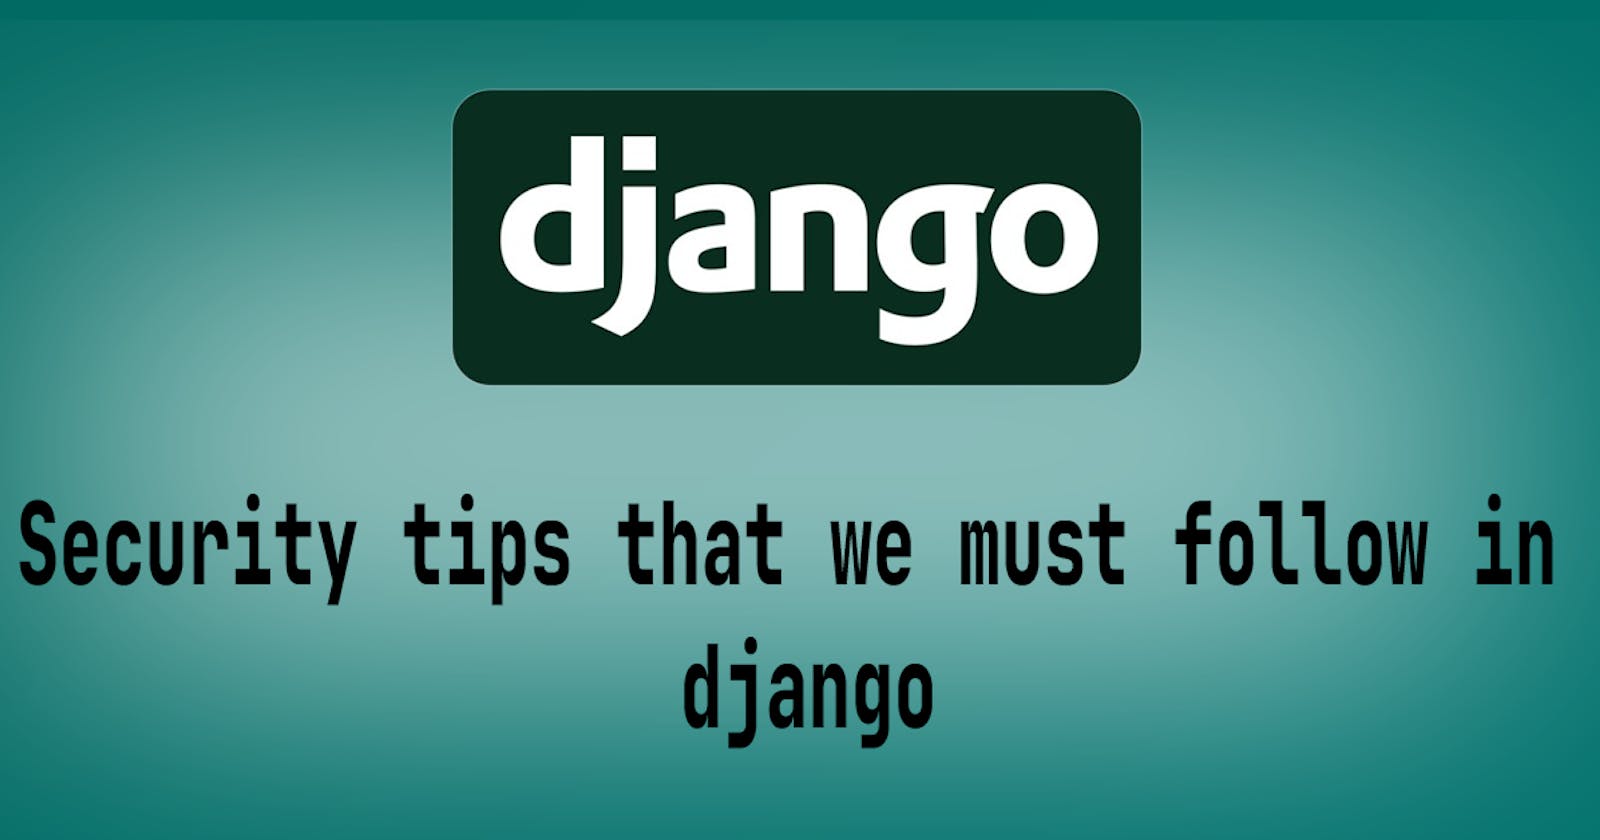 Security tips that we must follow in django